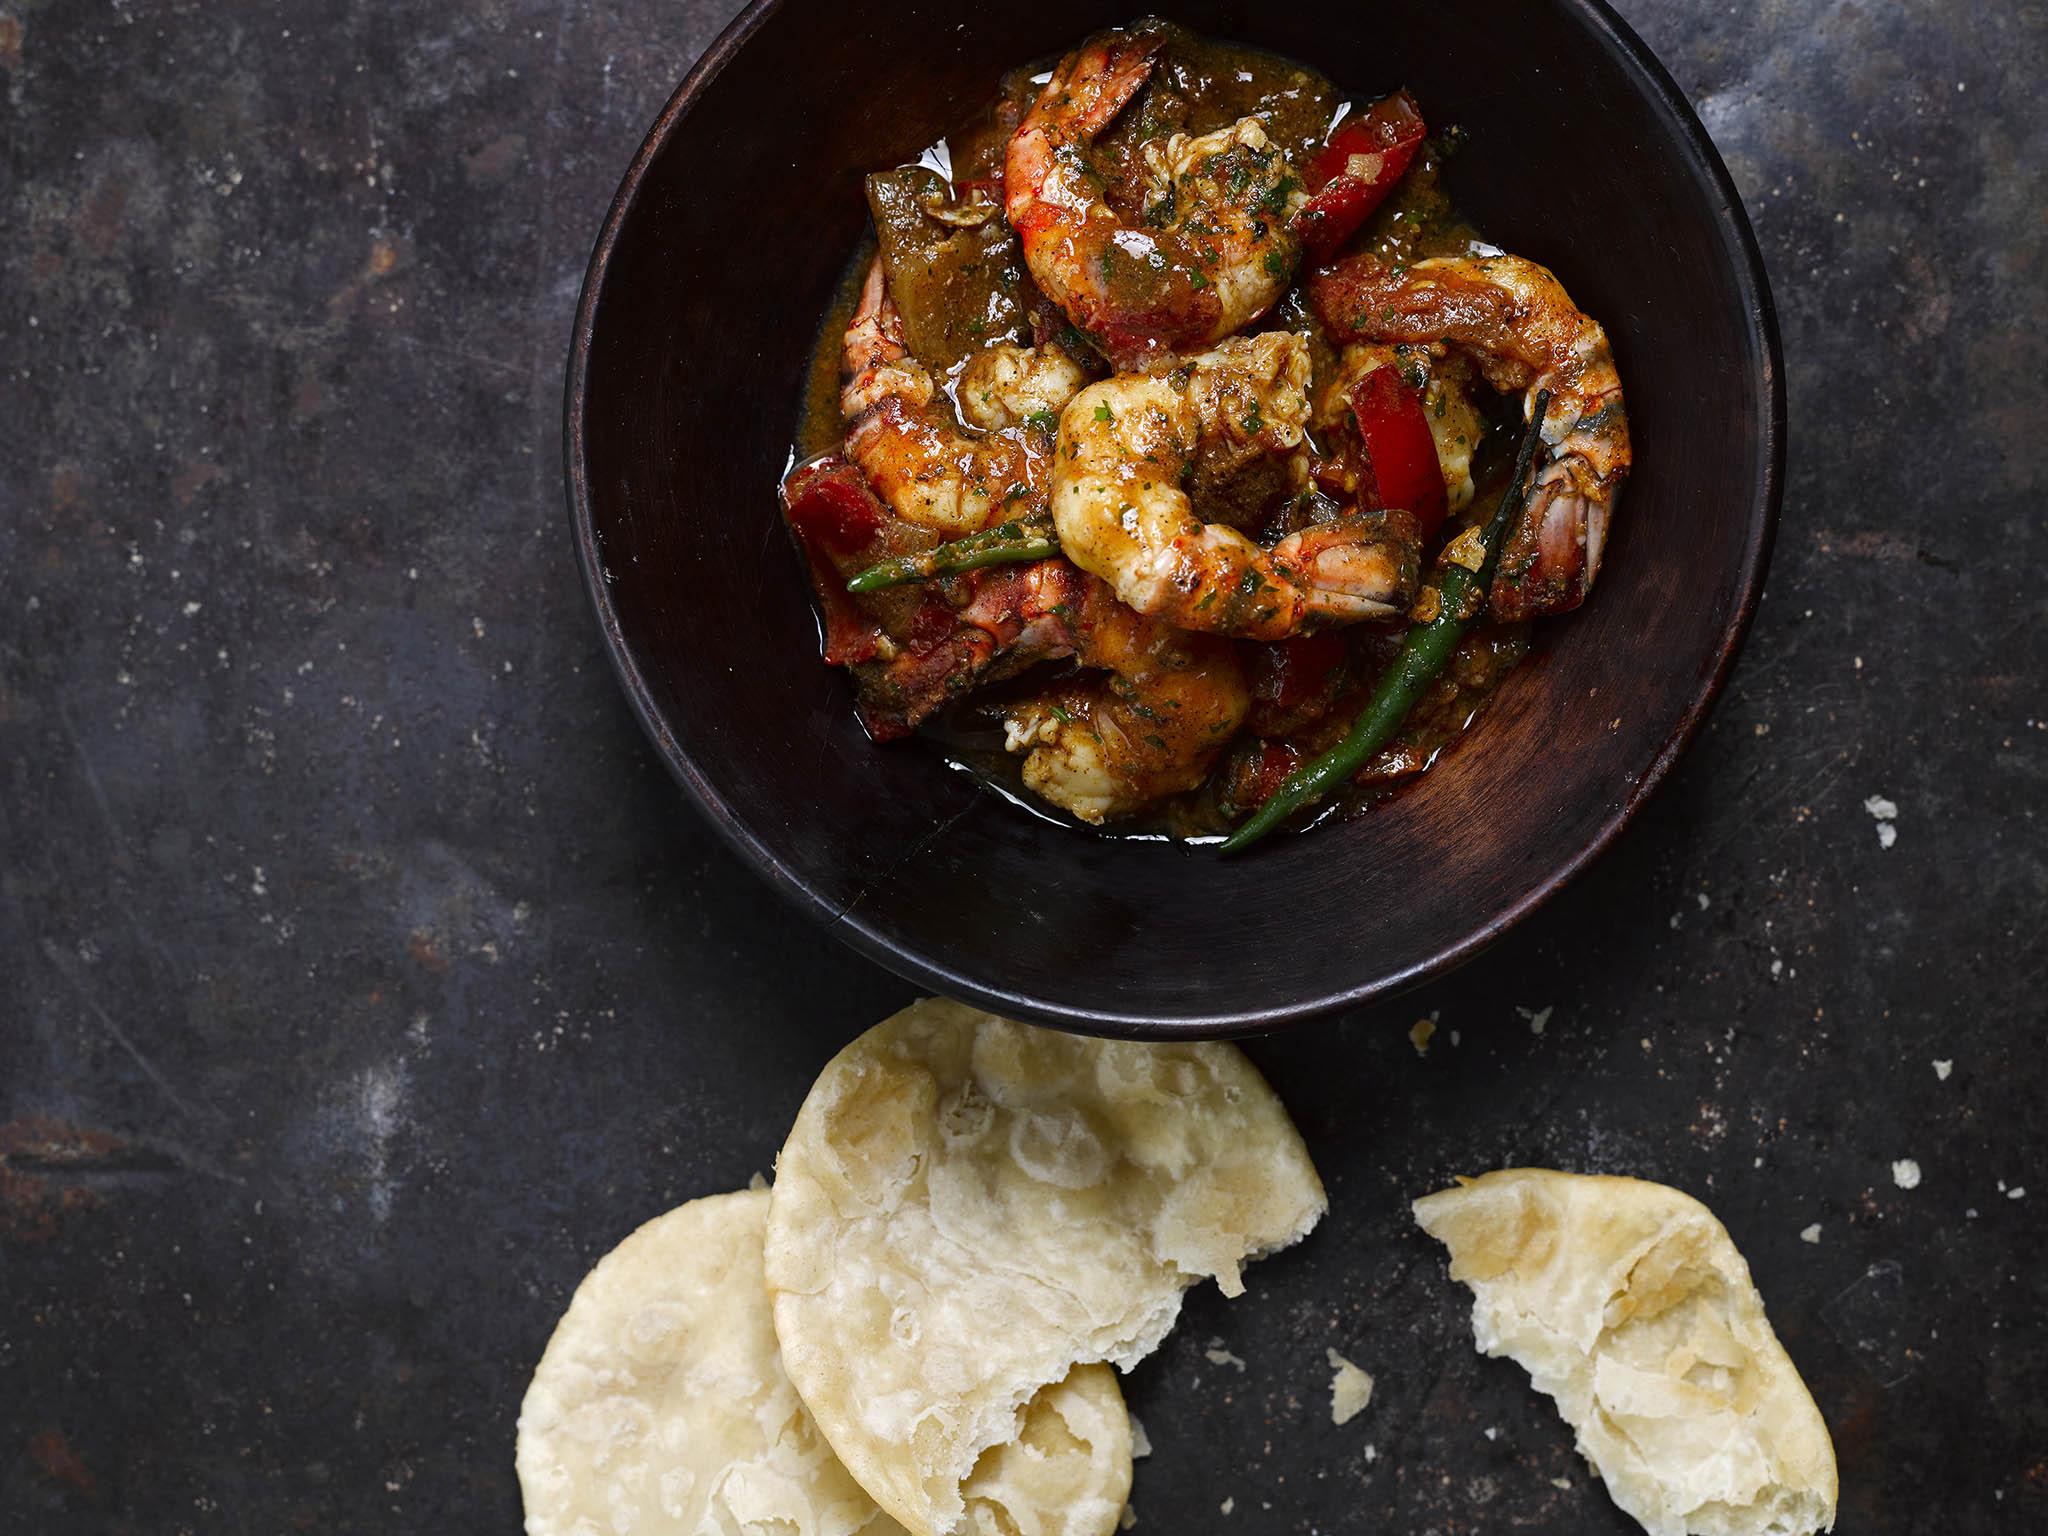 'My Bangladesh Kitchen' cookbook: Recipes from prawn bhuna to tamarind pop-overs